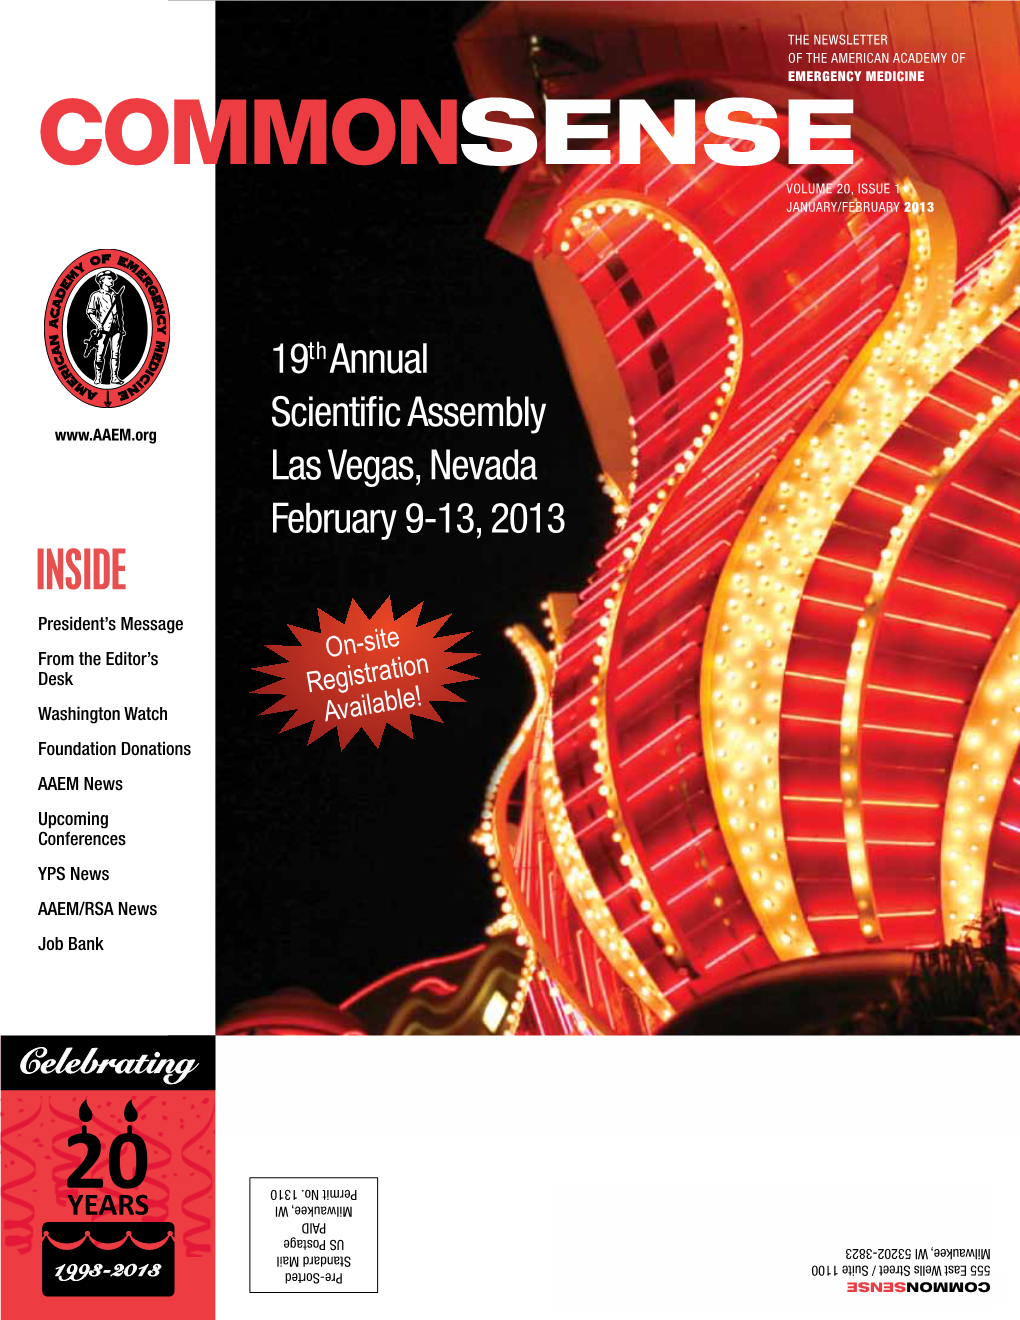 COMMONSENSE Volume 20, Issue 1 January/February 2013